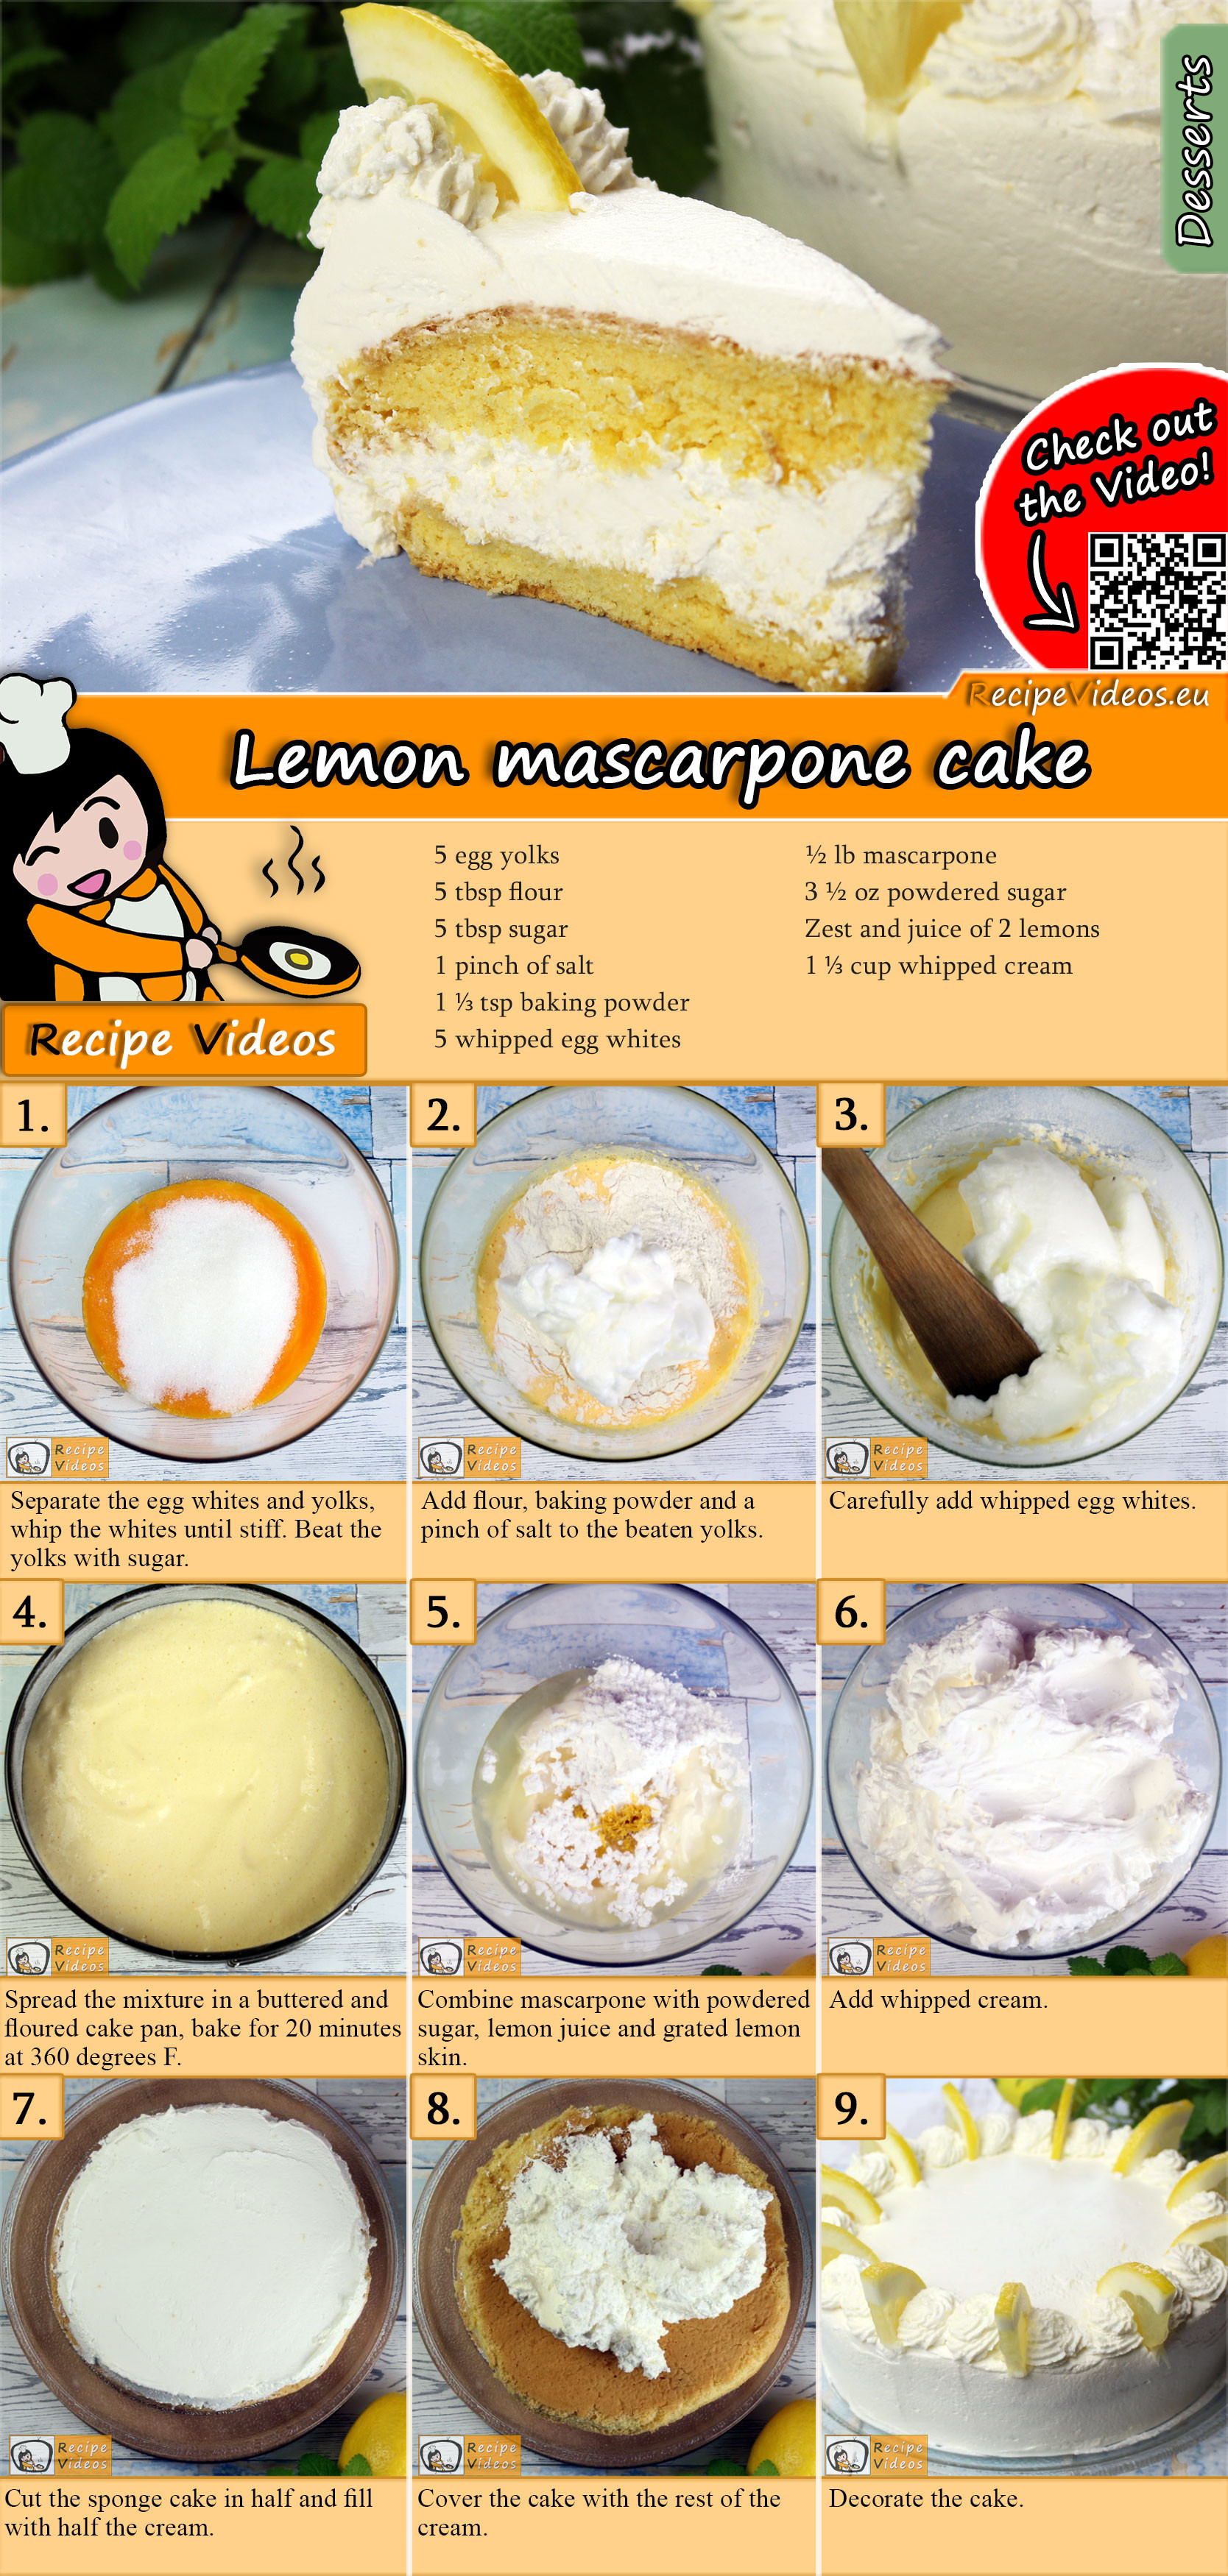 Lemon mascarpone cake recipe with video